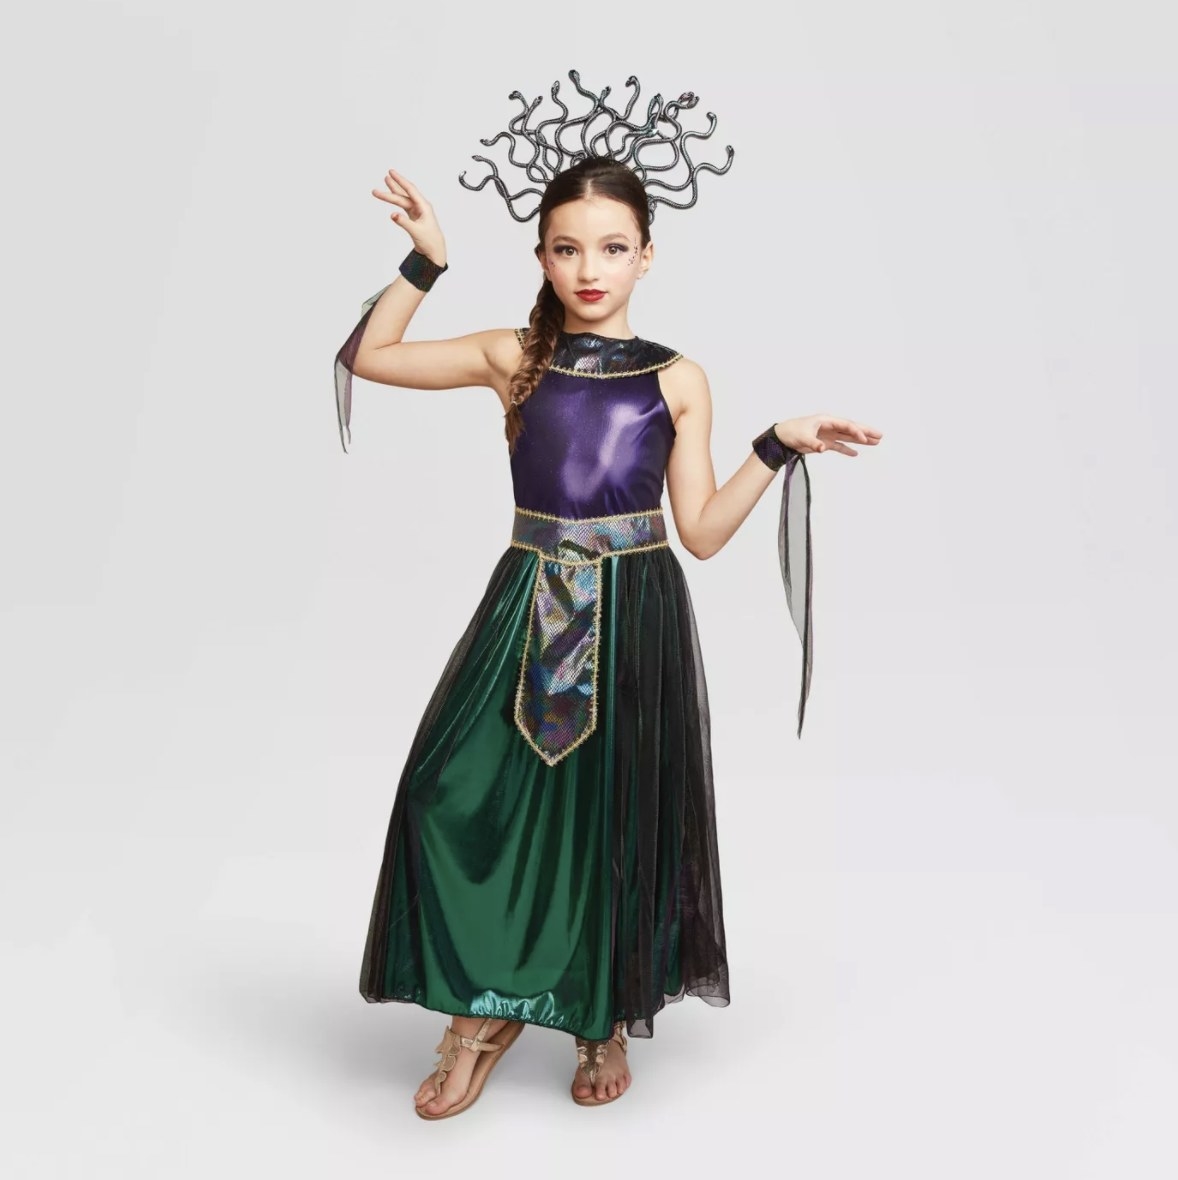 A child wears a green, black purple shiny medusa costume with draping armbands and a snake-like headpiece